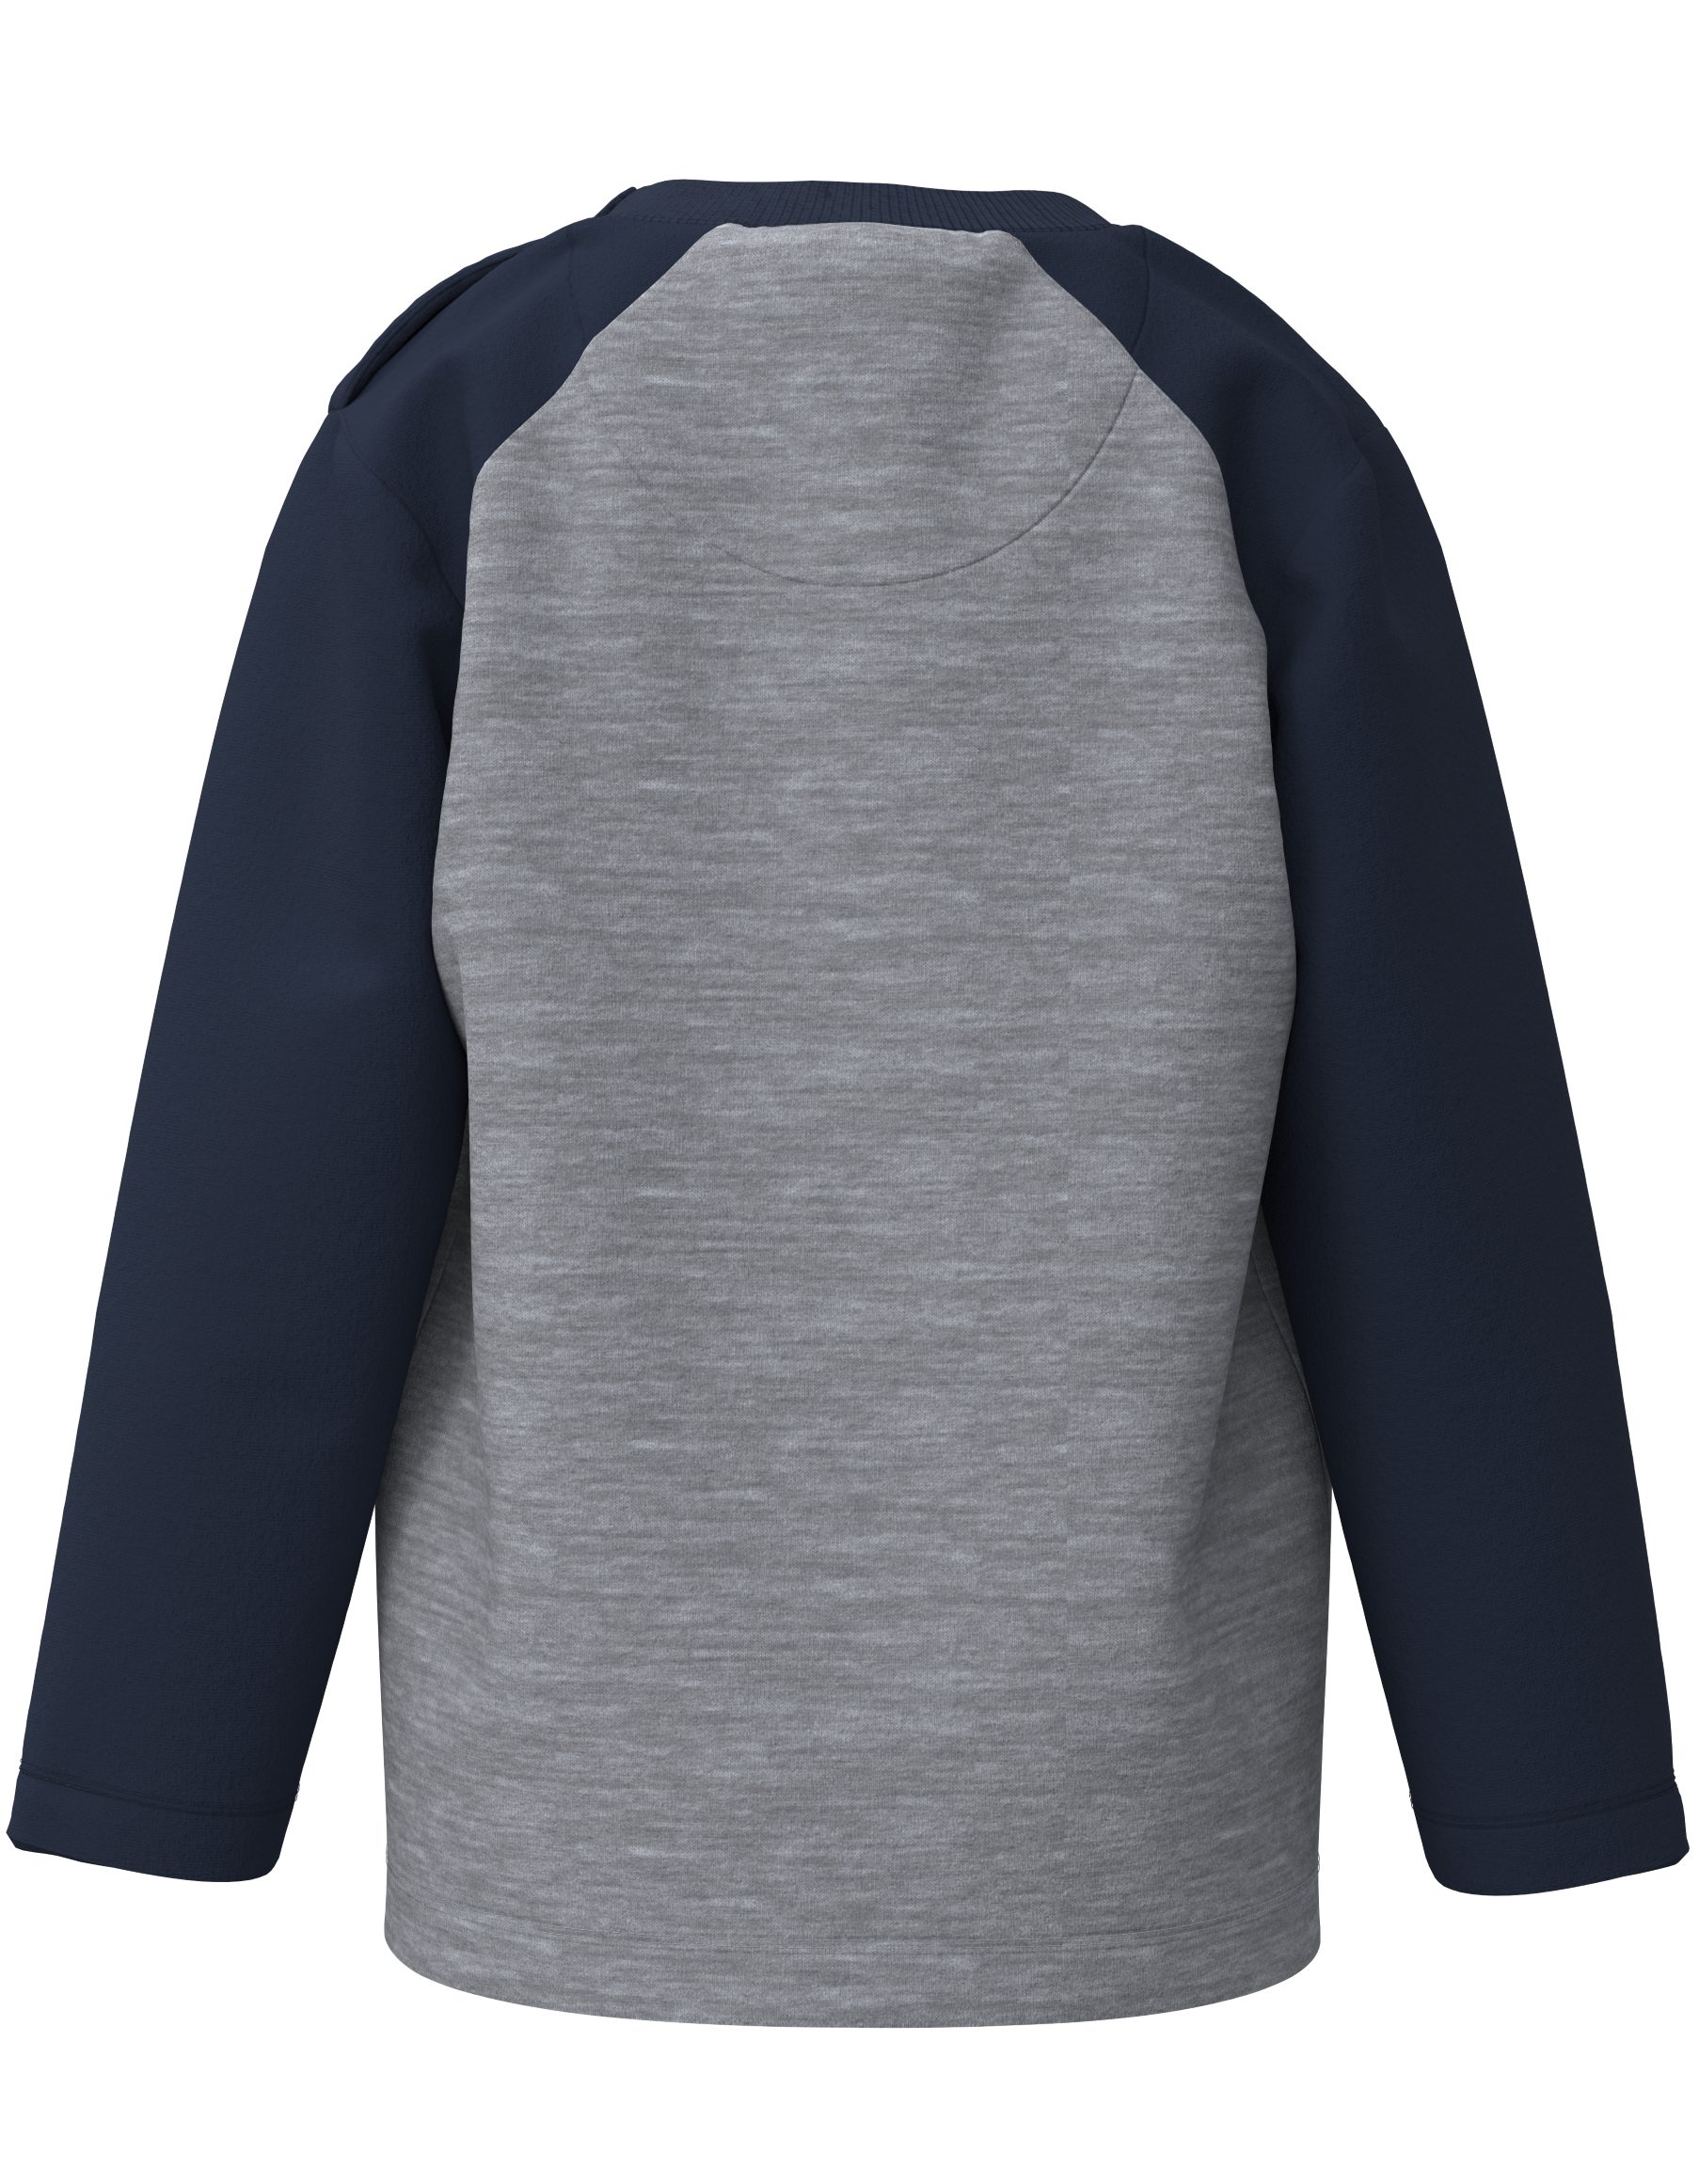 Bobo Siebenschläfer Langarmshirt kontrastfarbige melange/blau Bio-Baumwolle, Raglan, 100 bedruckt, % Ärmel, grau unisex